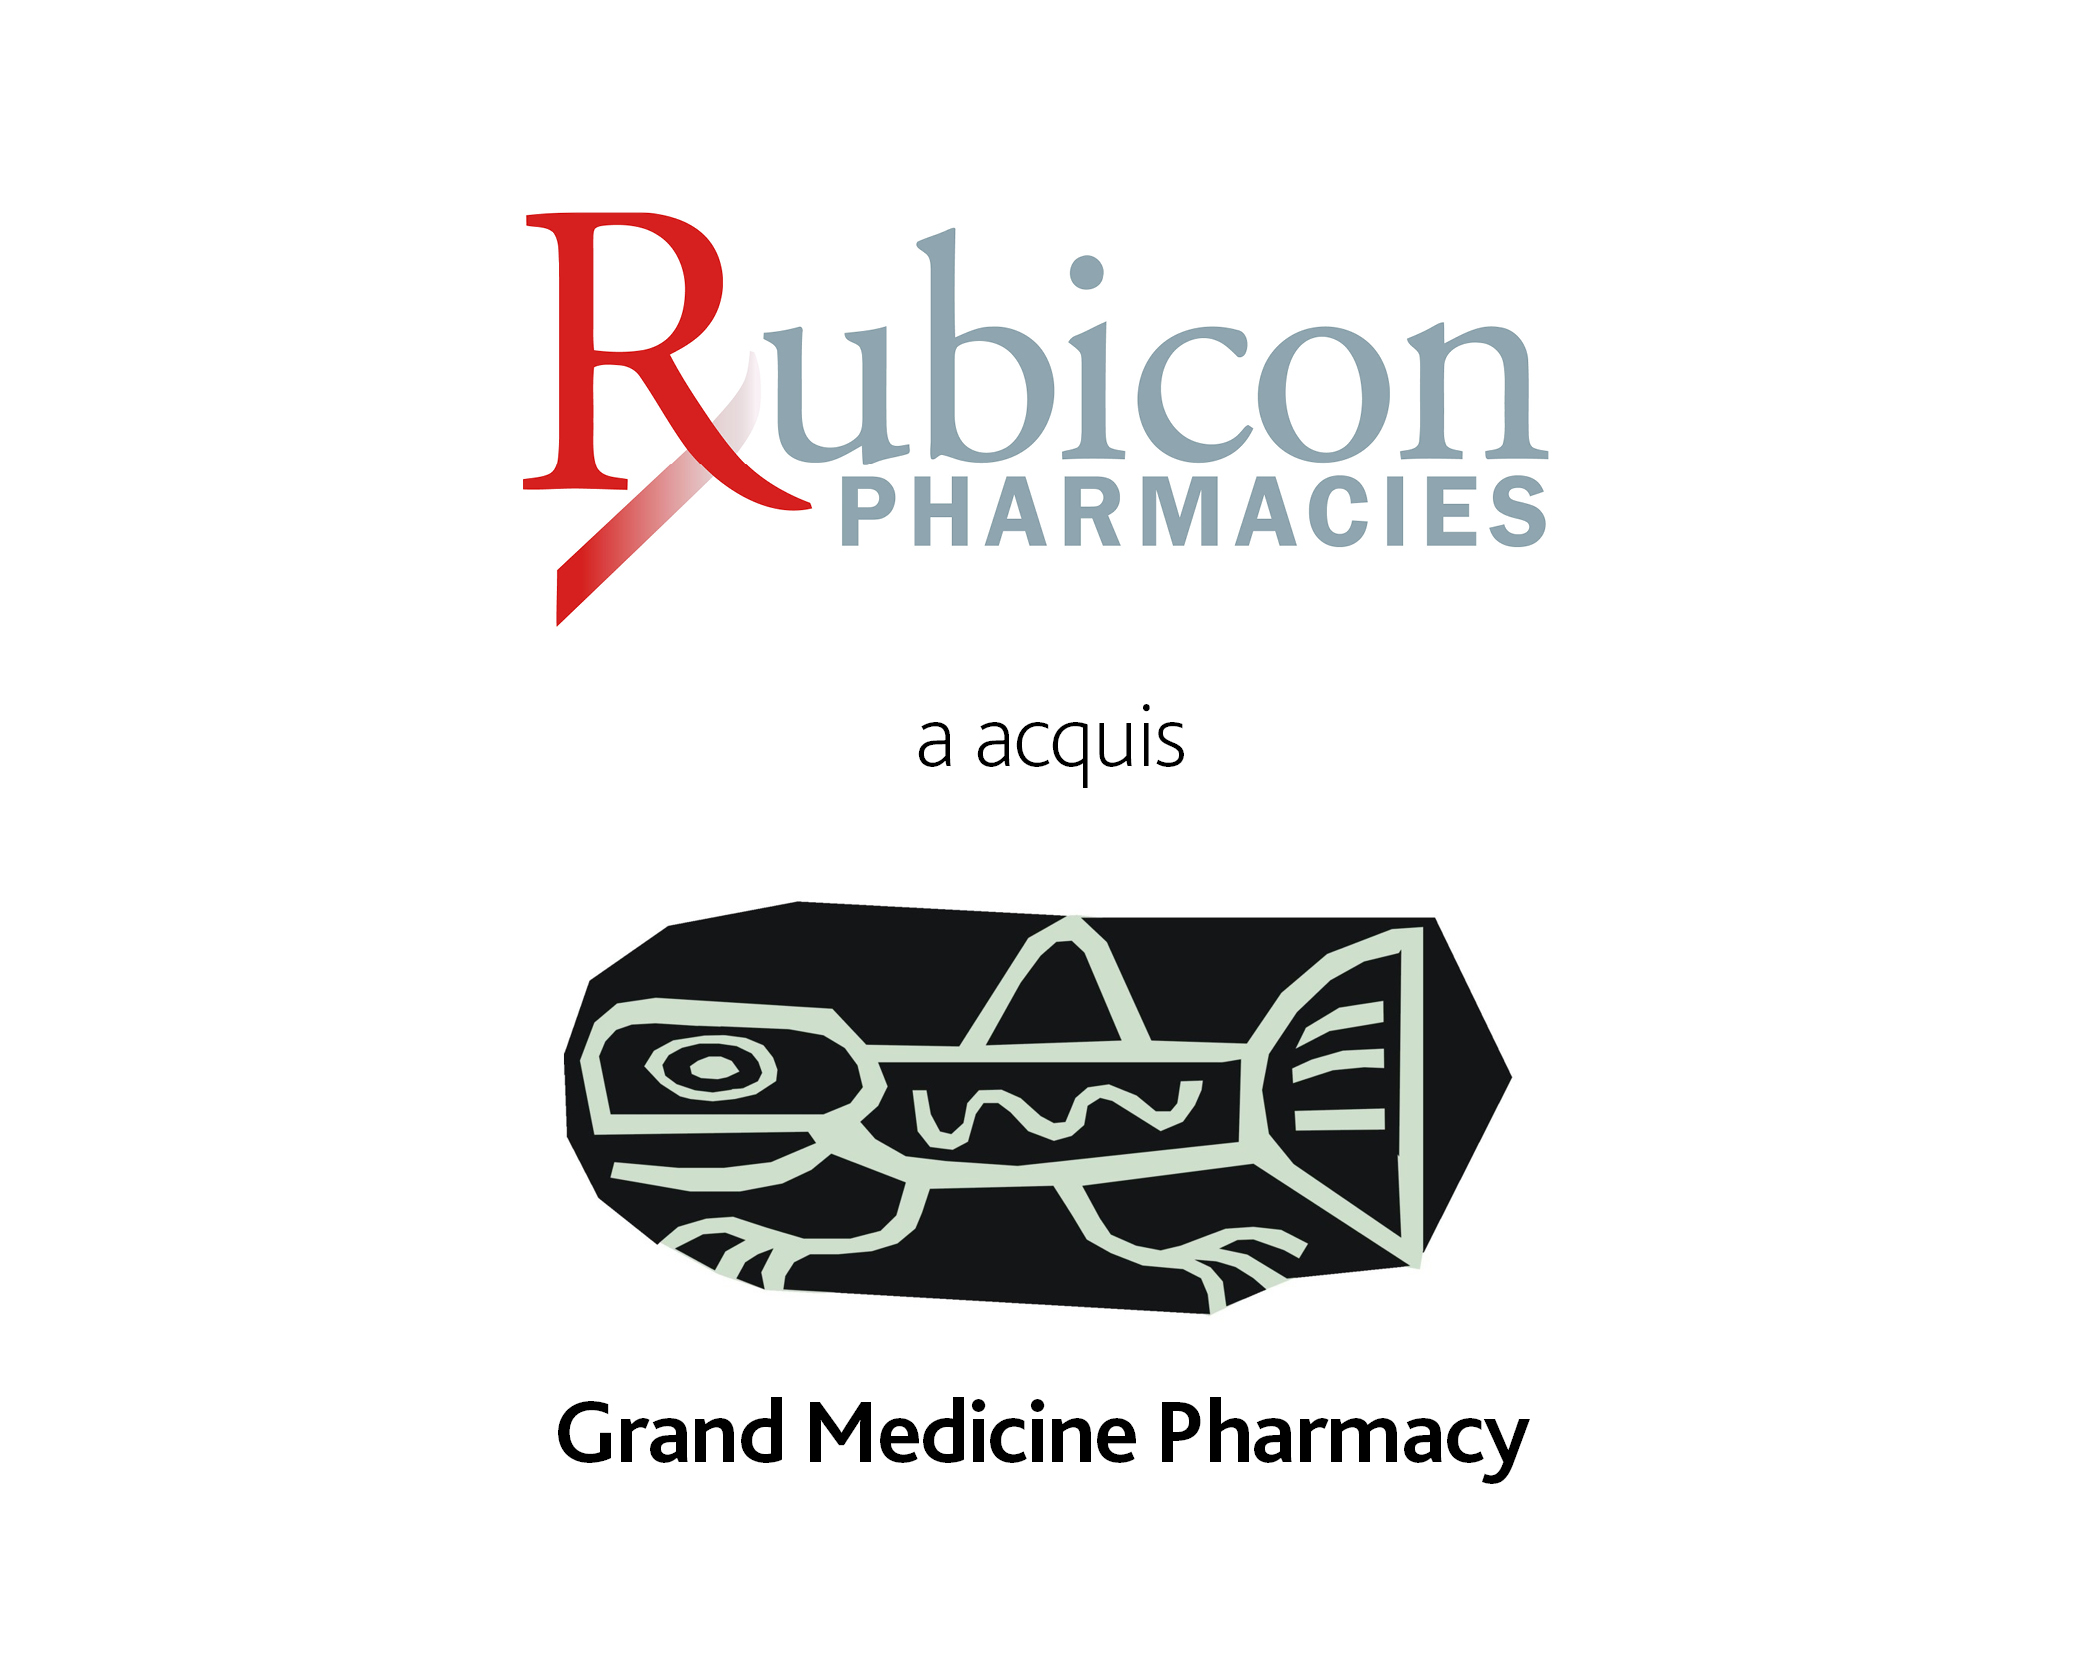 Rubicon Pharmacies a acquis Grand Medicine Pharmacy.